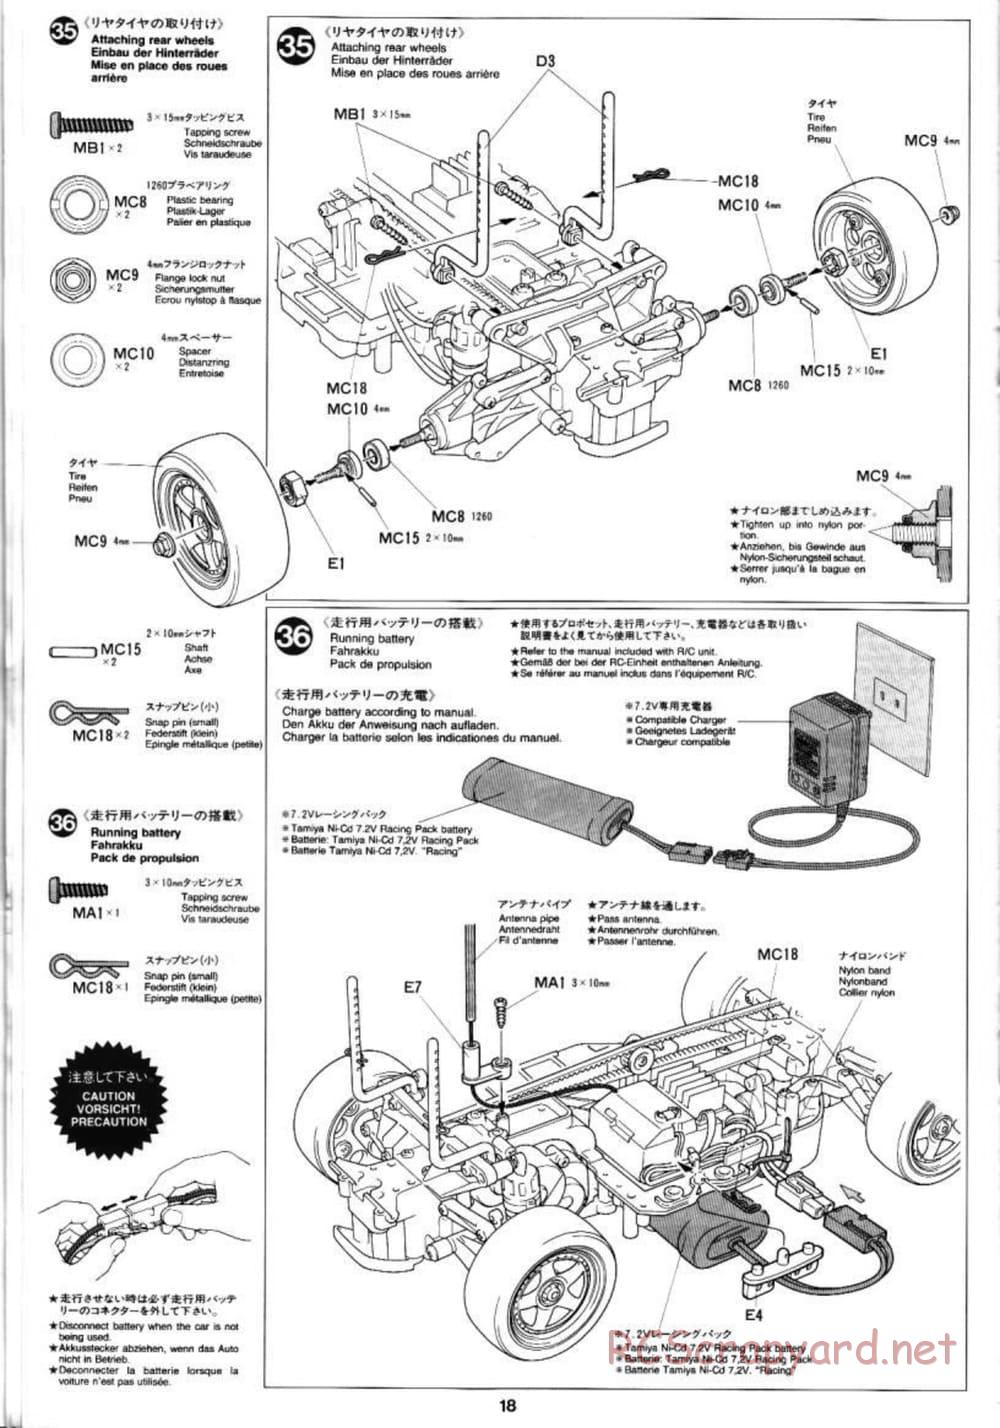 Tamiya - PIAA Porsche 911 - TA-03RS Chassis - Manual - Page 18